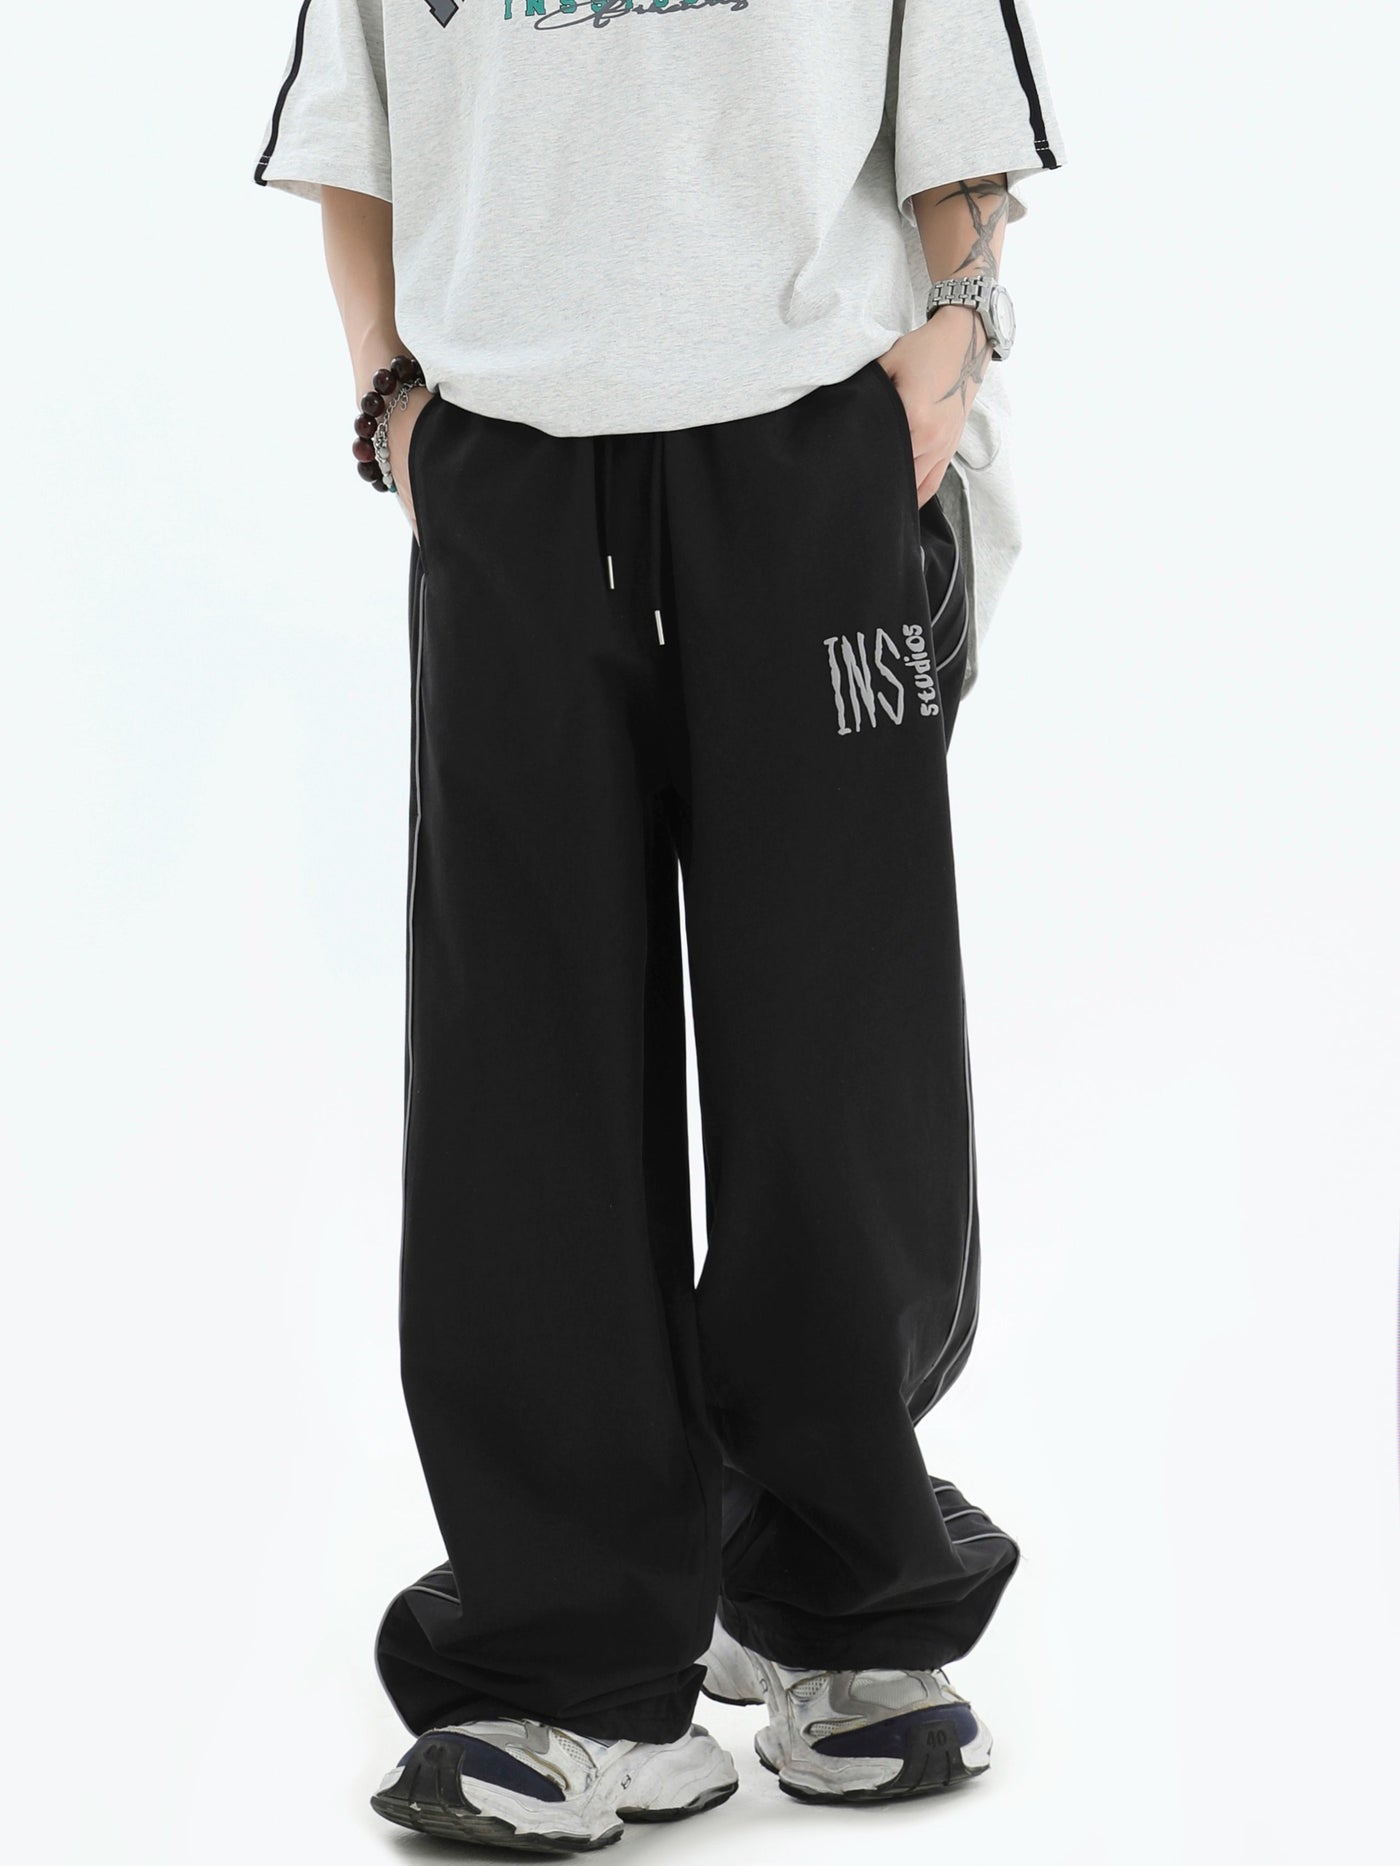 Drawstring Comfty Fit Sweatpants Korean Street Fashion Pants By INS Korea Shop Online at OH Vault